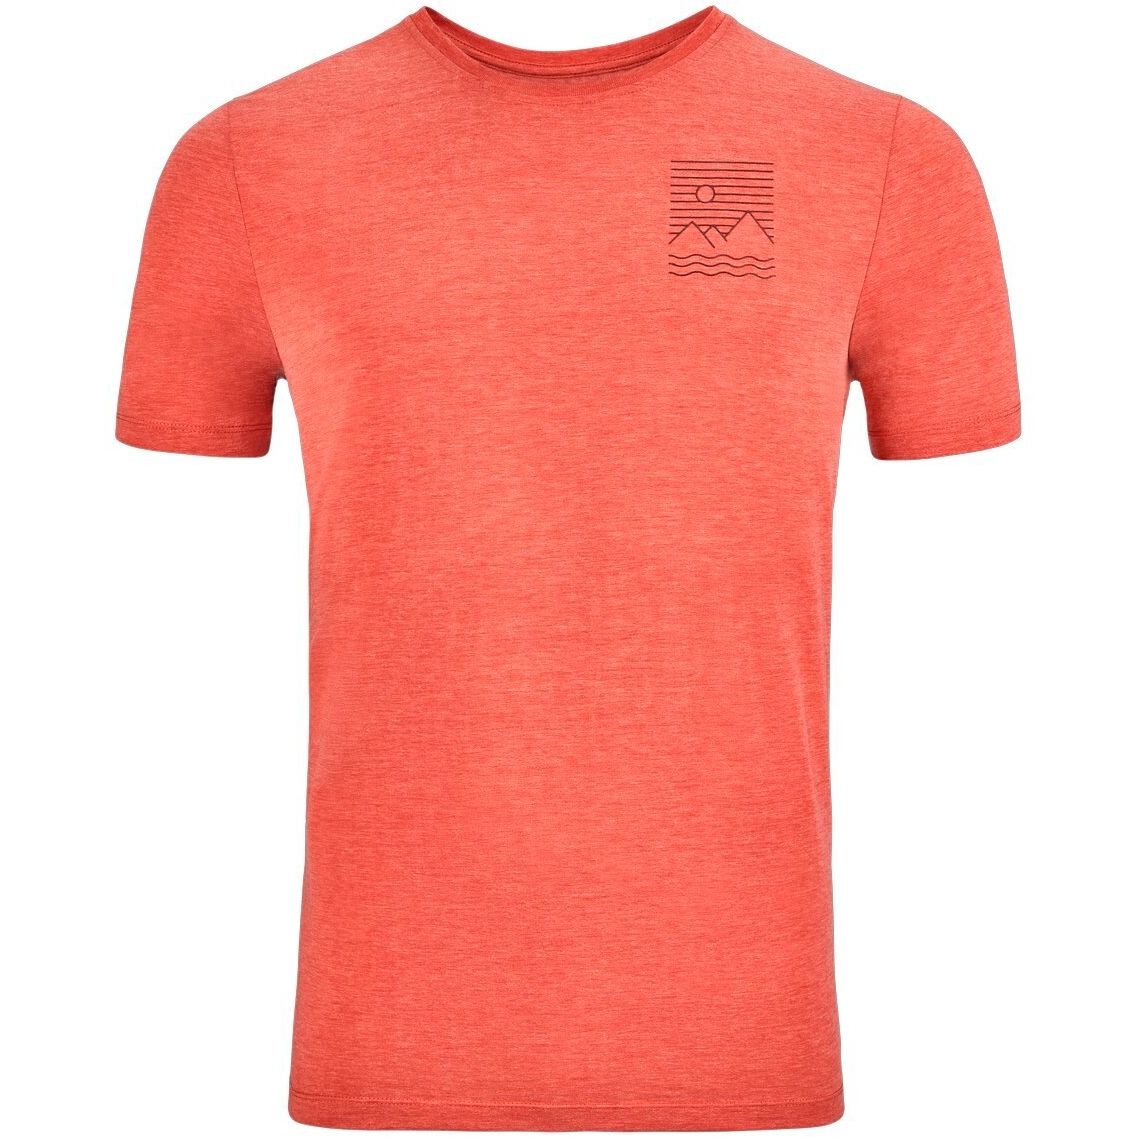 Produktbild von Odlo Ascent 365 T-Shirt mit linearem Landschaftsprint Herren - ketchup melange